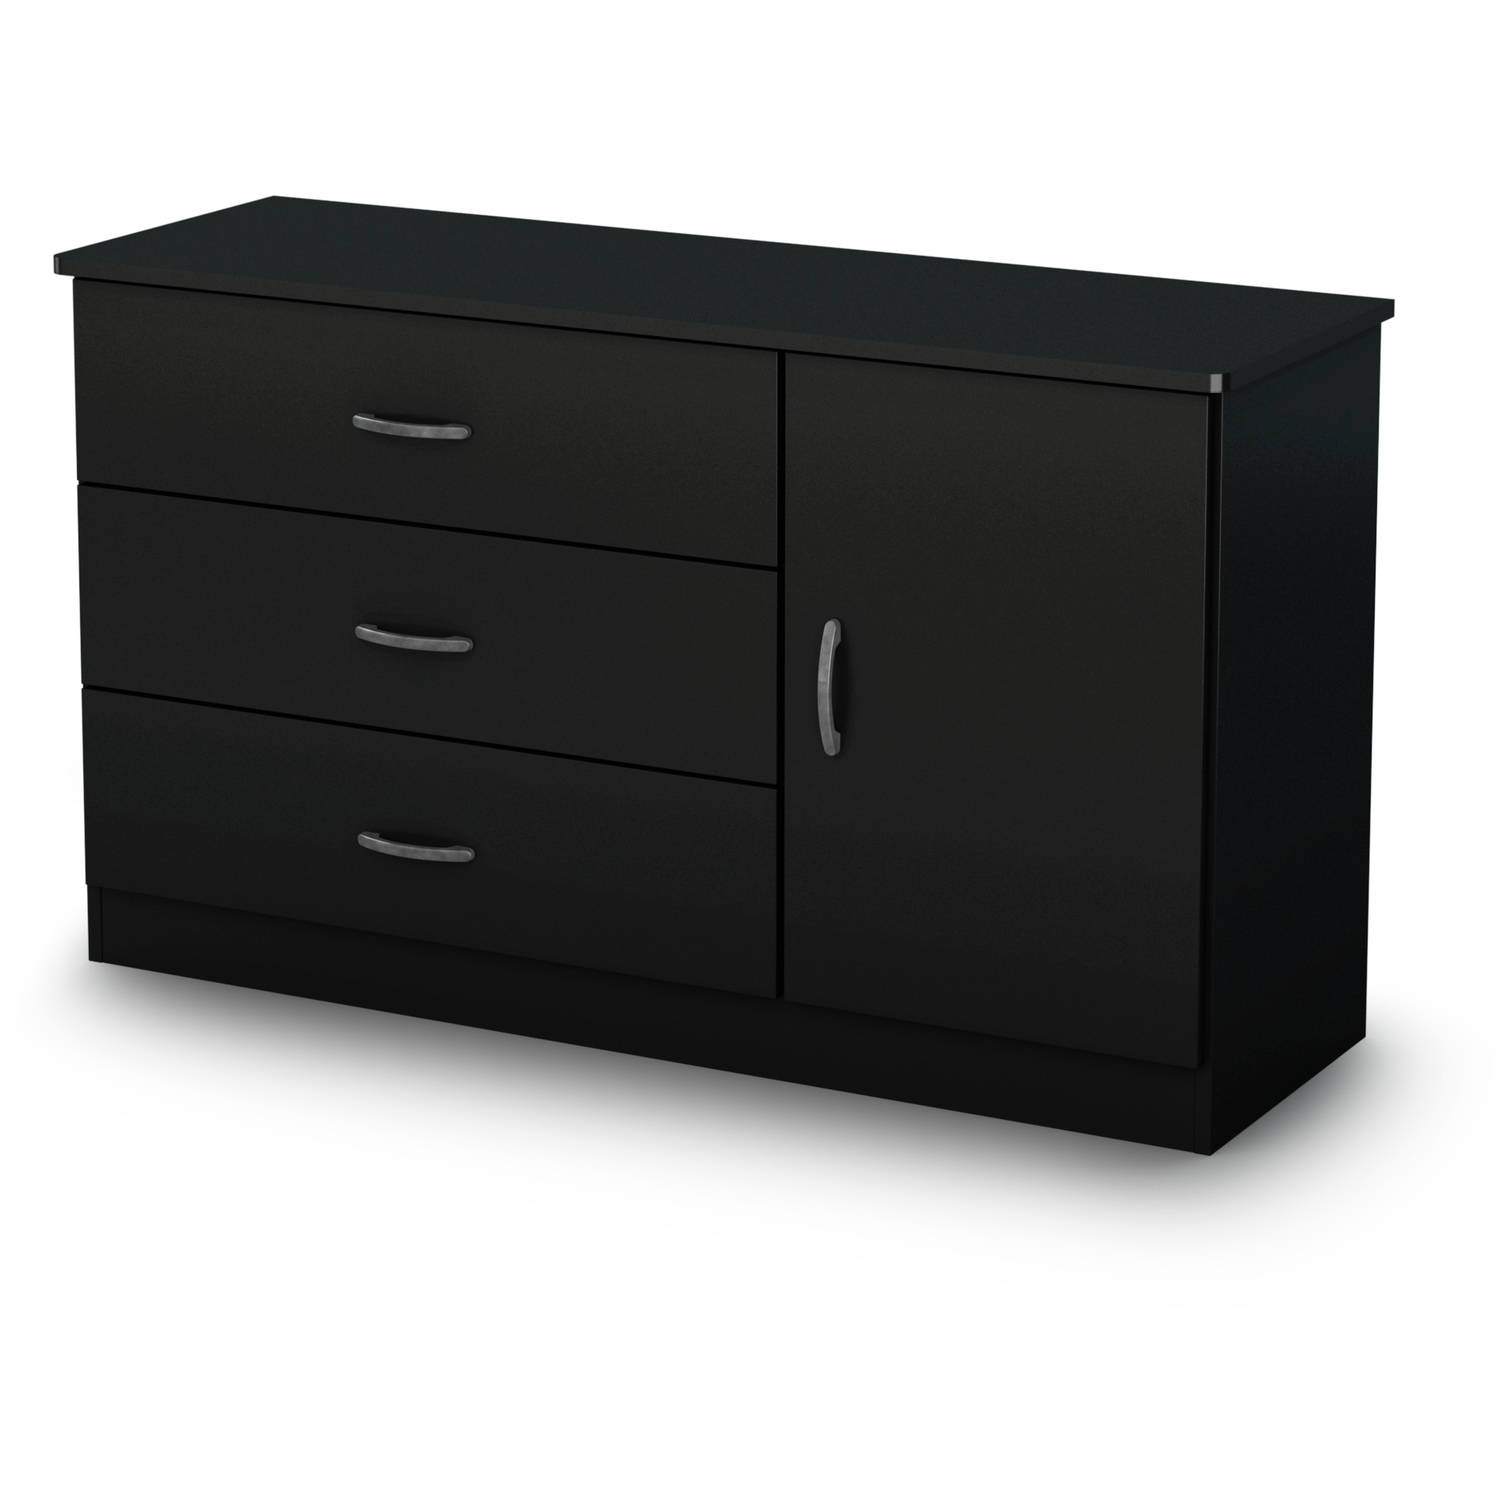 South Shore Smart Basics 3-Drawer Dresser with Door, Black - image 1 of 5